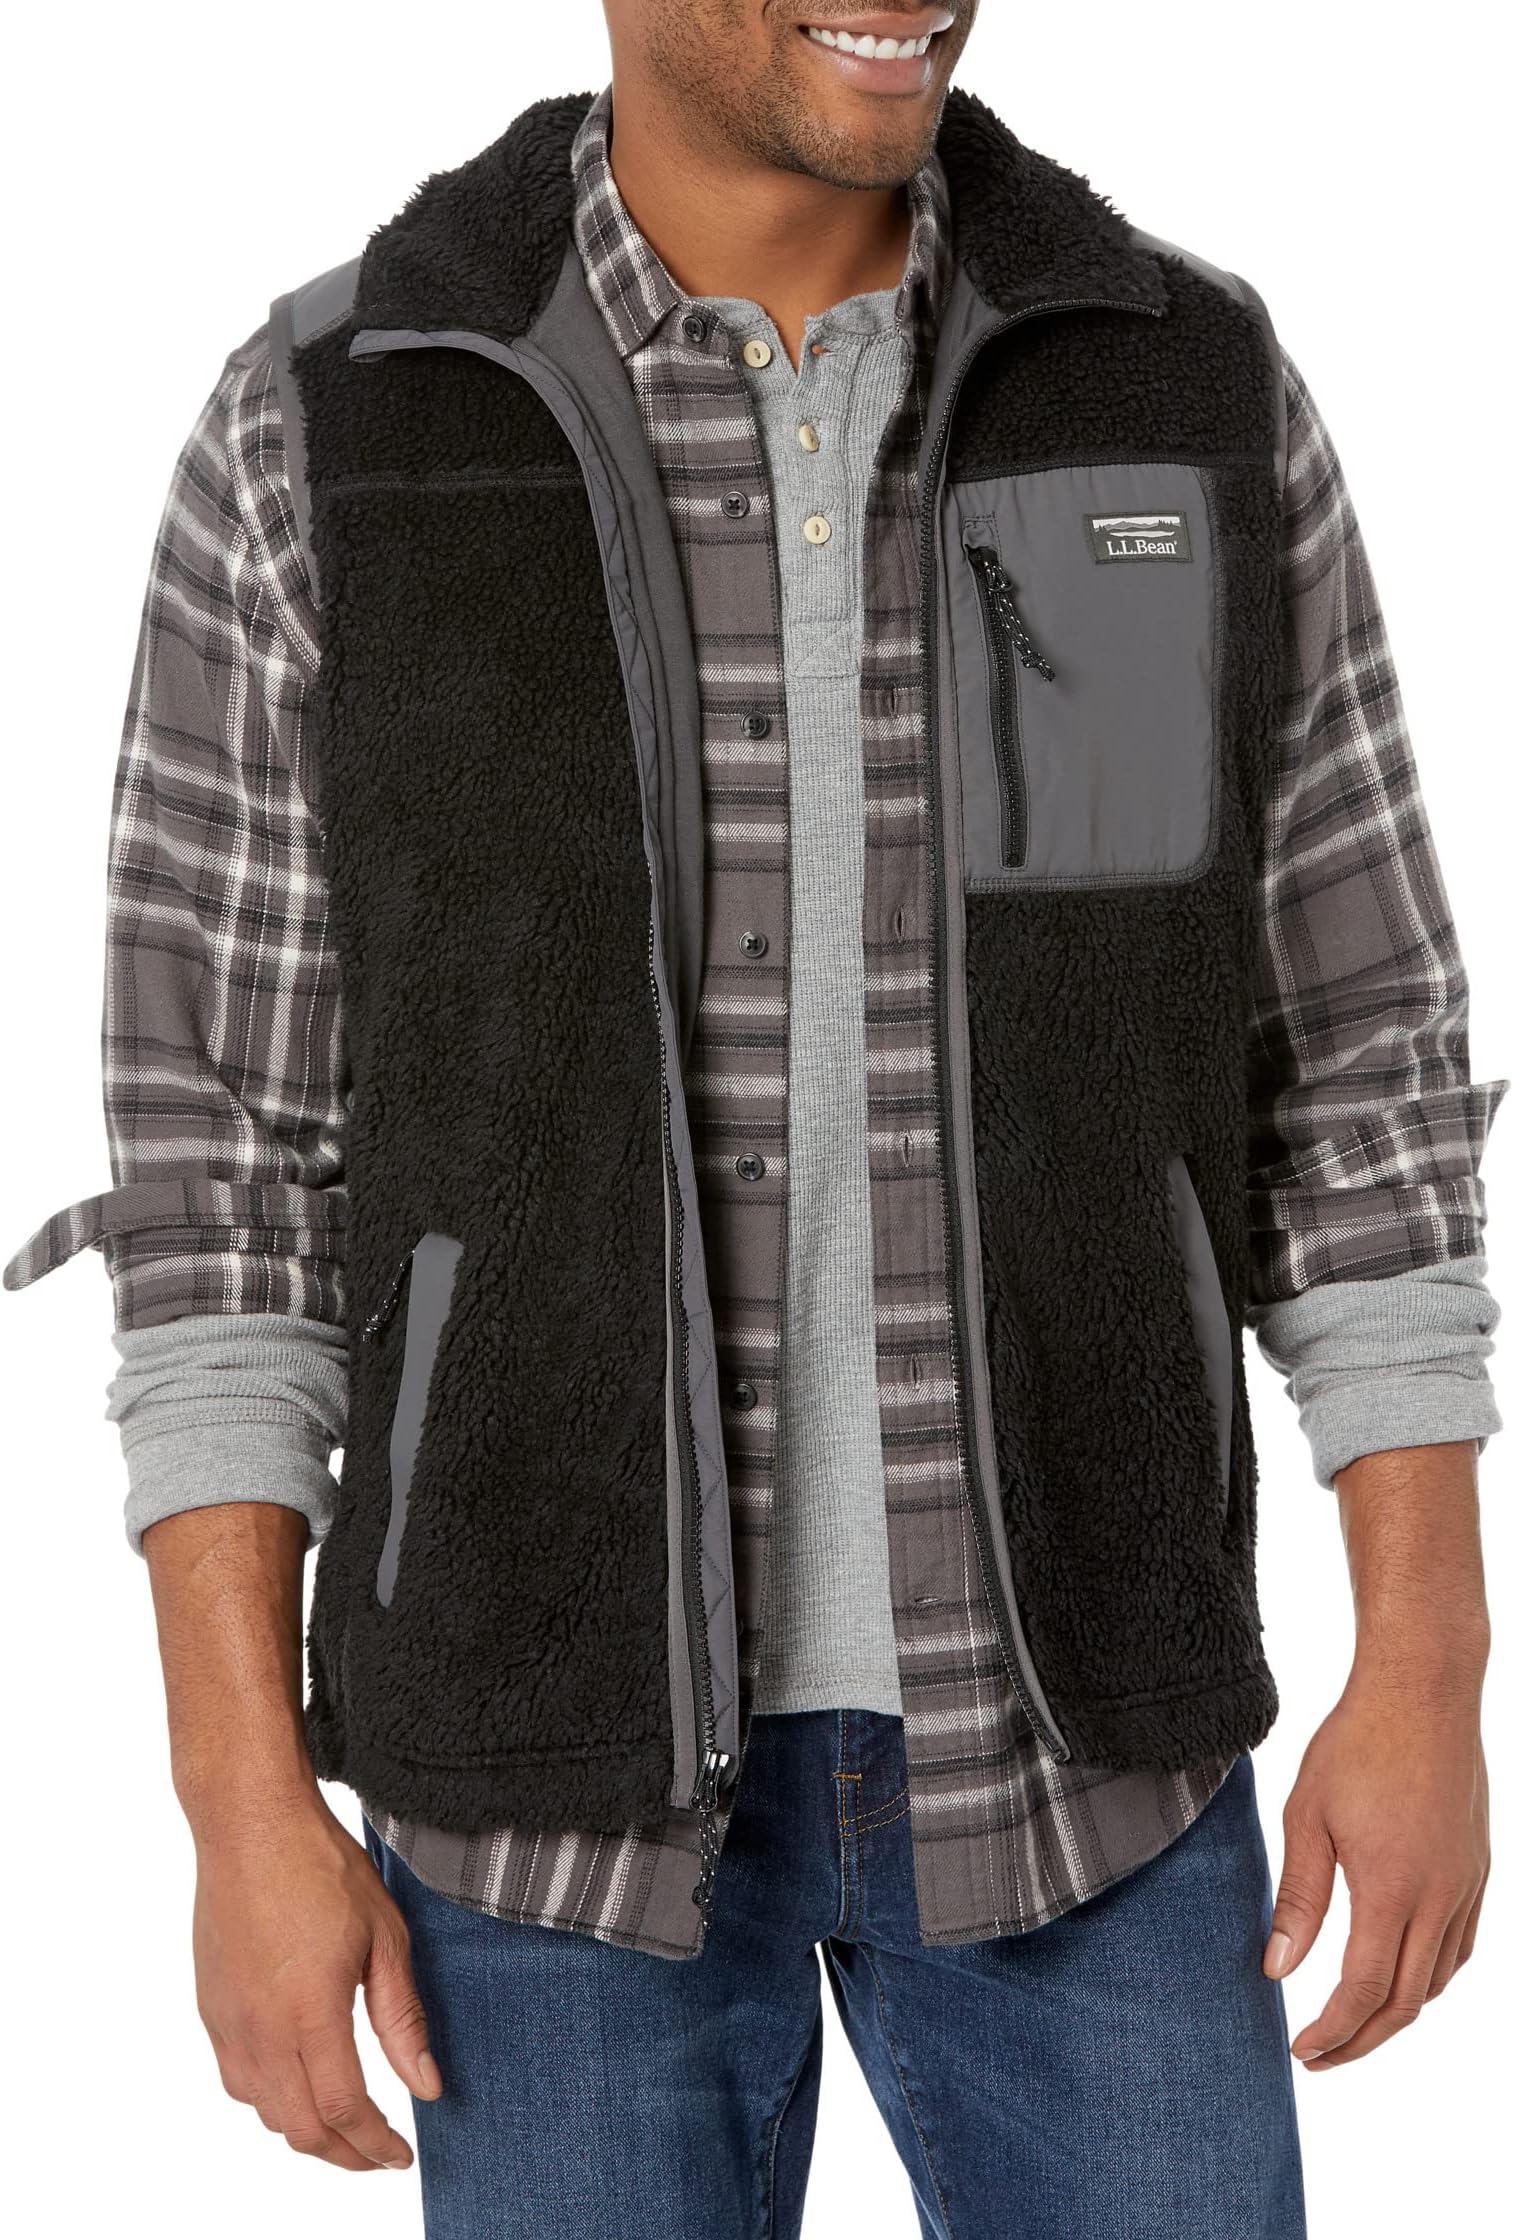 Жилет Bean's Sherpa Vest Regular L.L.Bean, черный